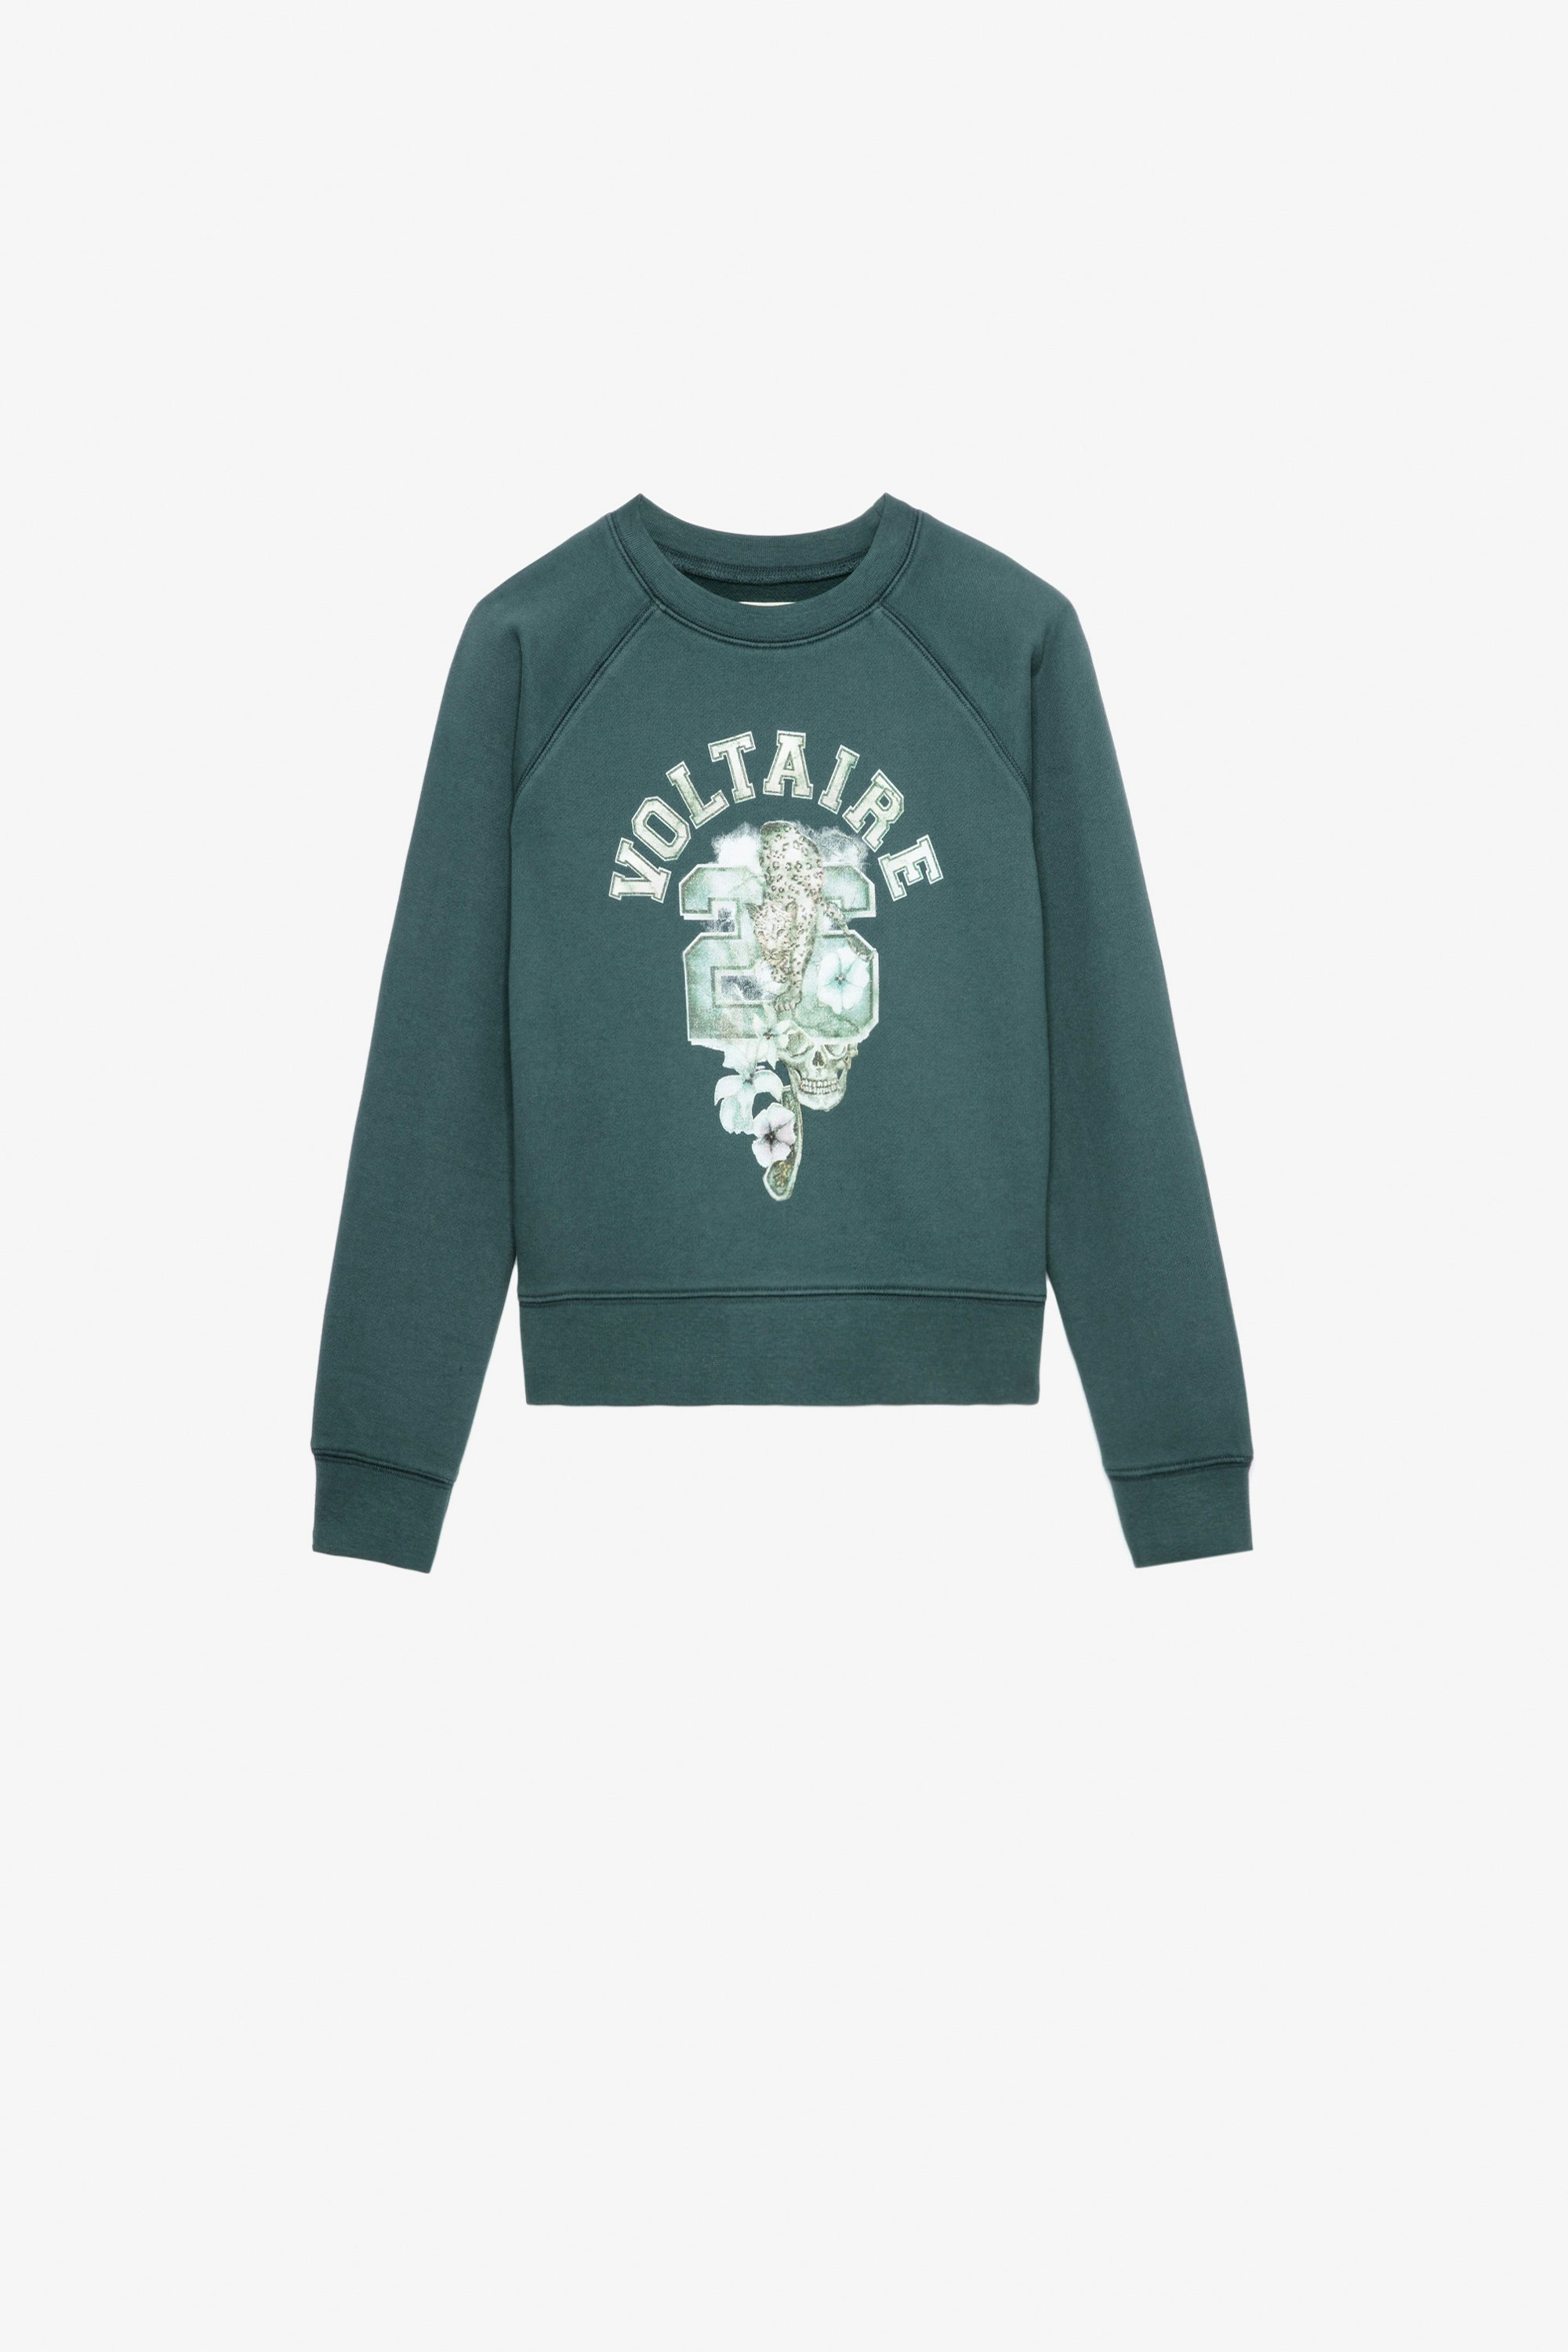 Upper Girls’ Sweatshirt - Girls’ green cotton fleece sweatshirt with Voltaire illustration.